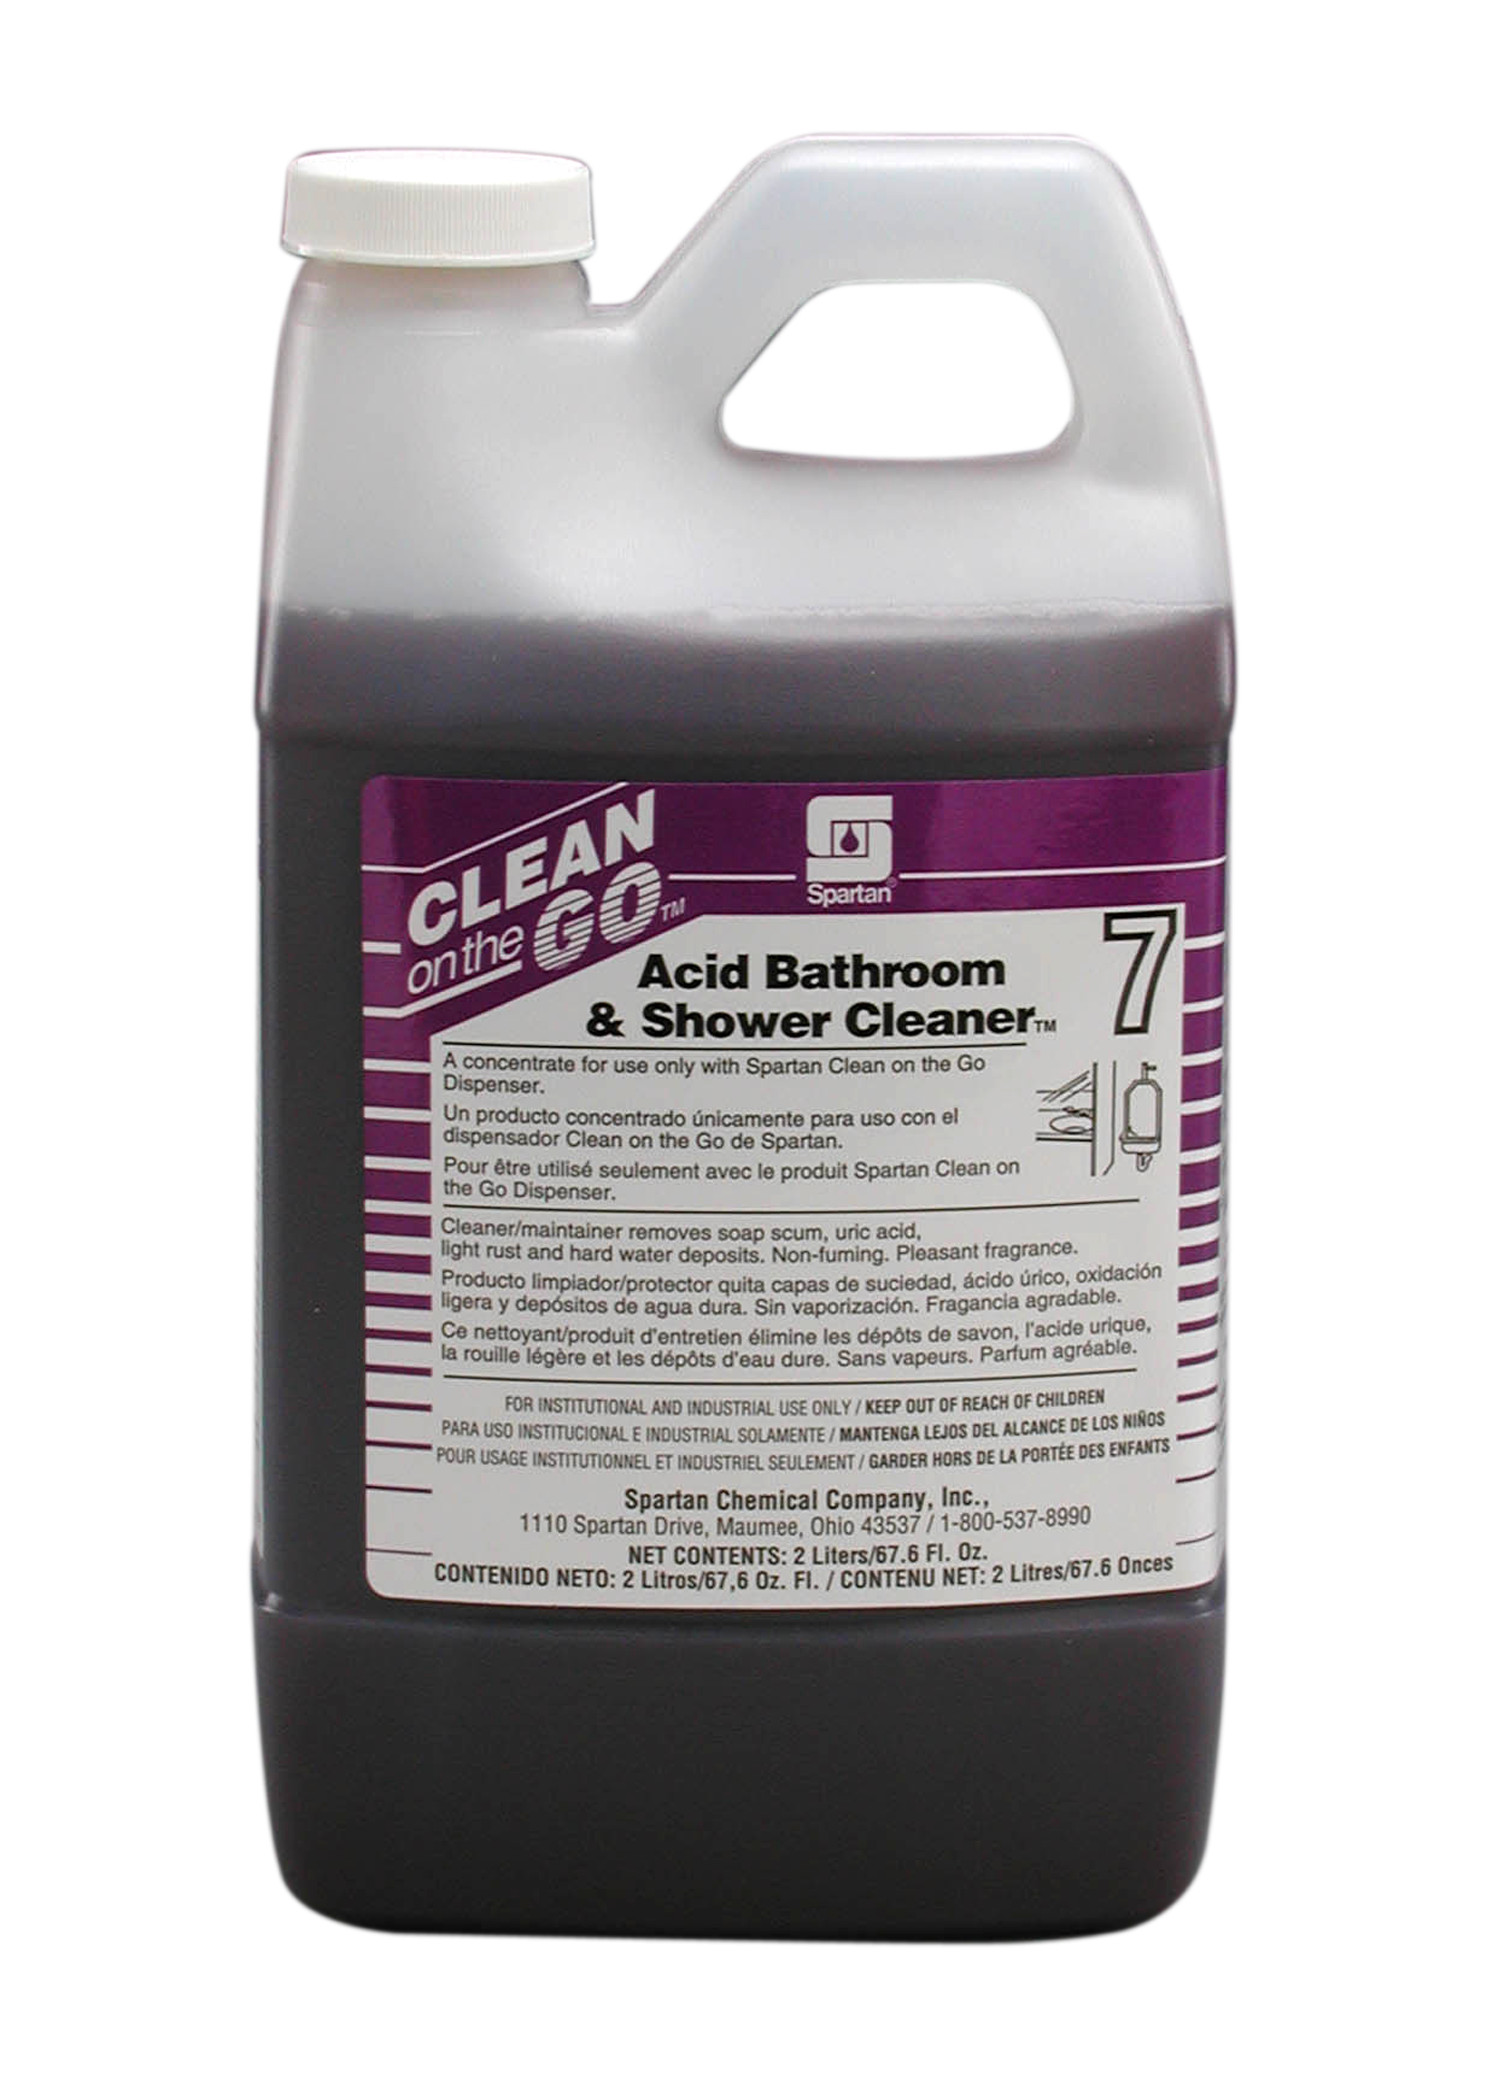 Spartan Chemical Company Acid Bathroom & Shower Cleaner 7, 2 LITER 4/CS